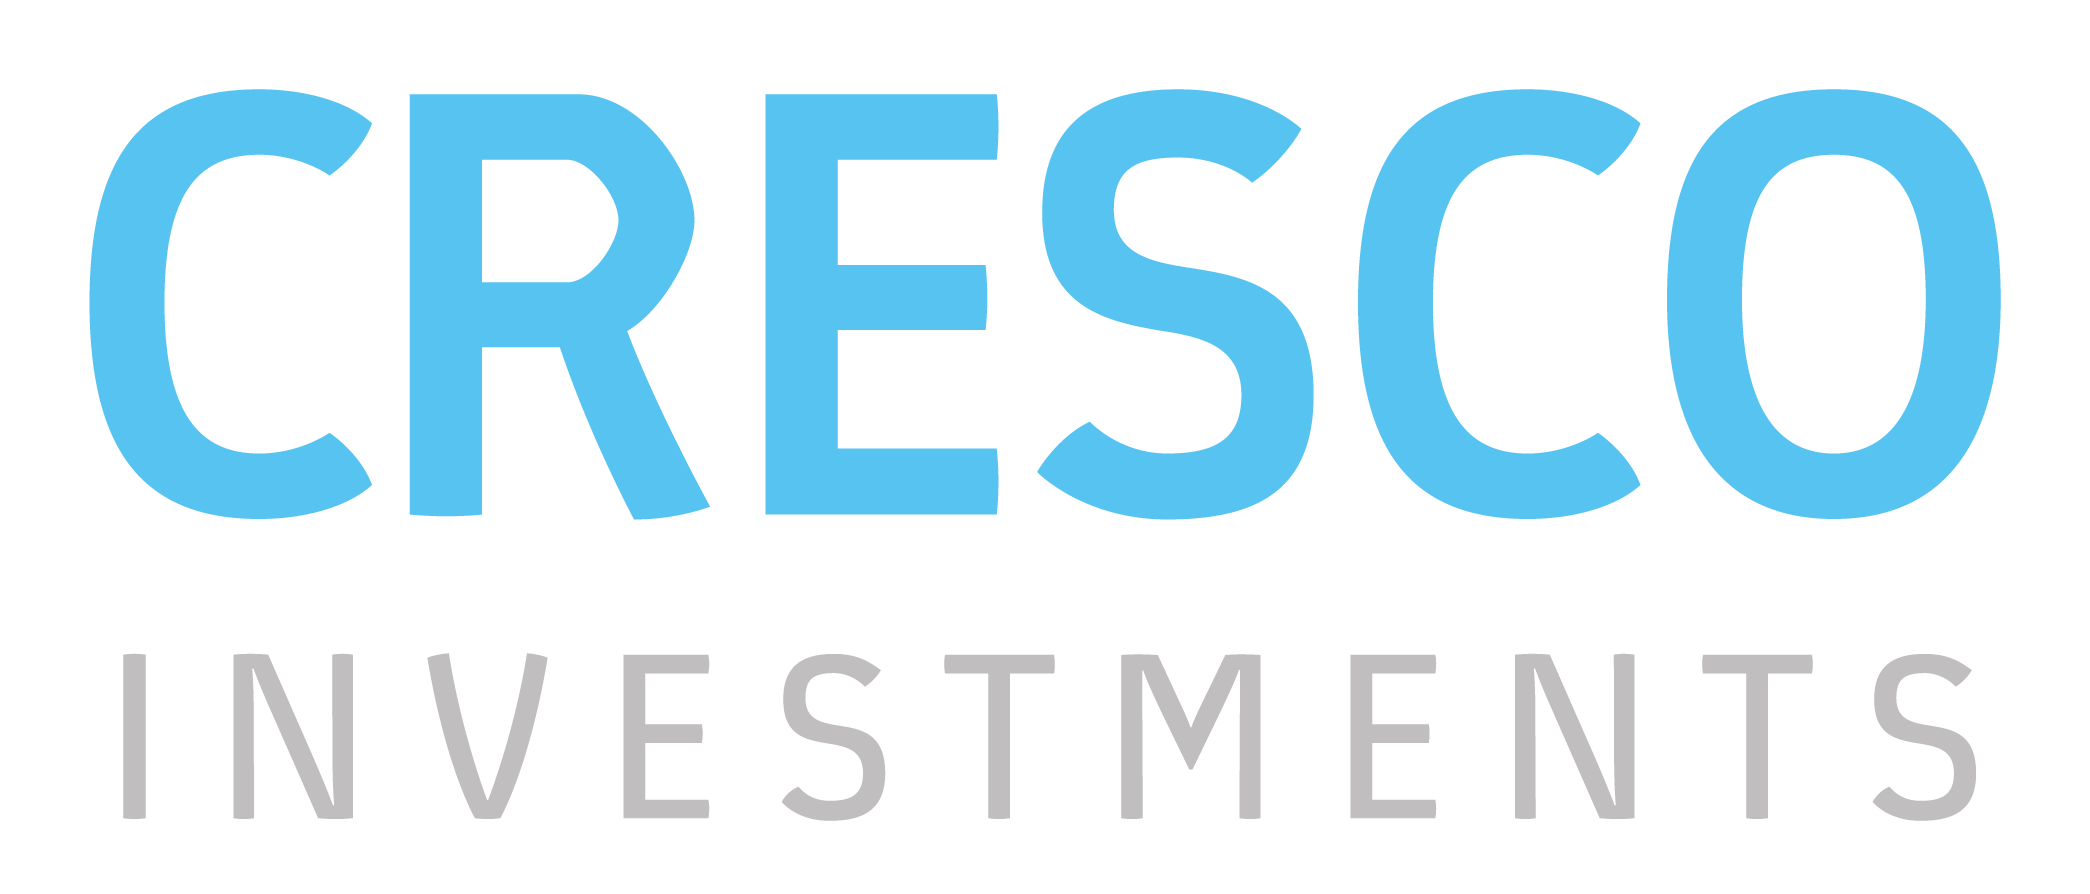 Cresco Investments Pte Ltd